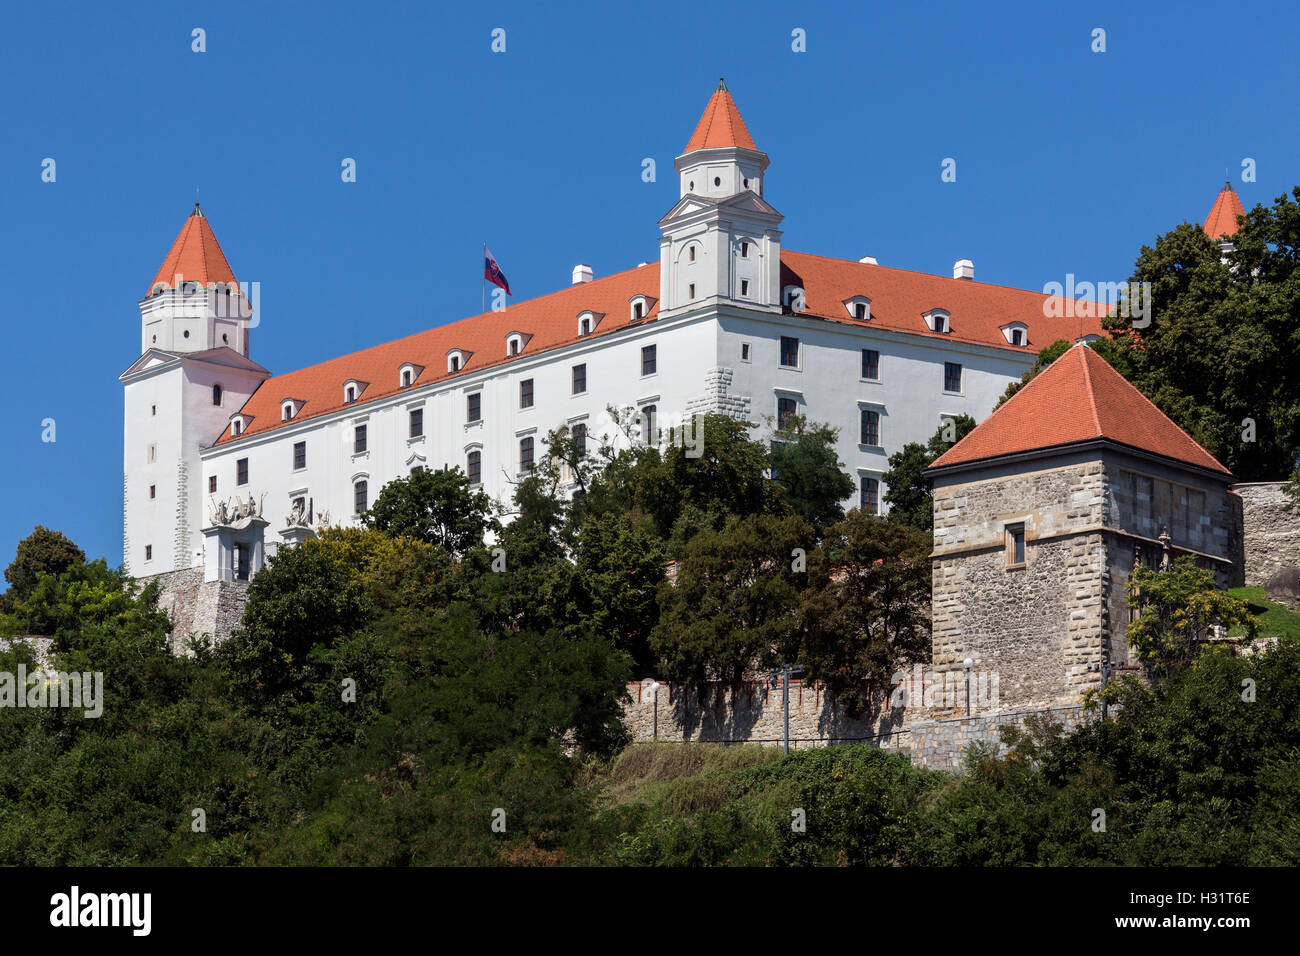 Die Burg von Bratislava - Bratislava - Slowakei. Stockfoto